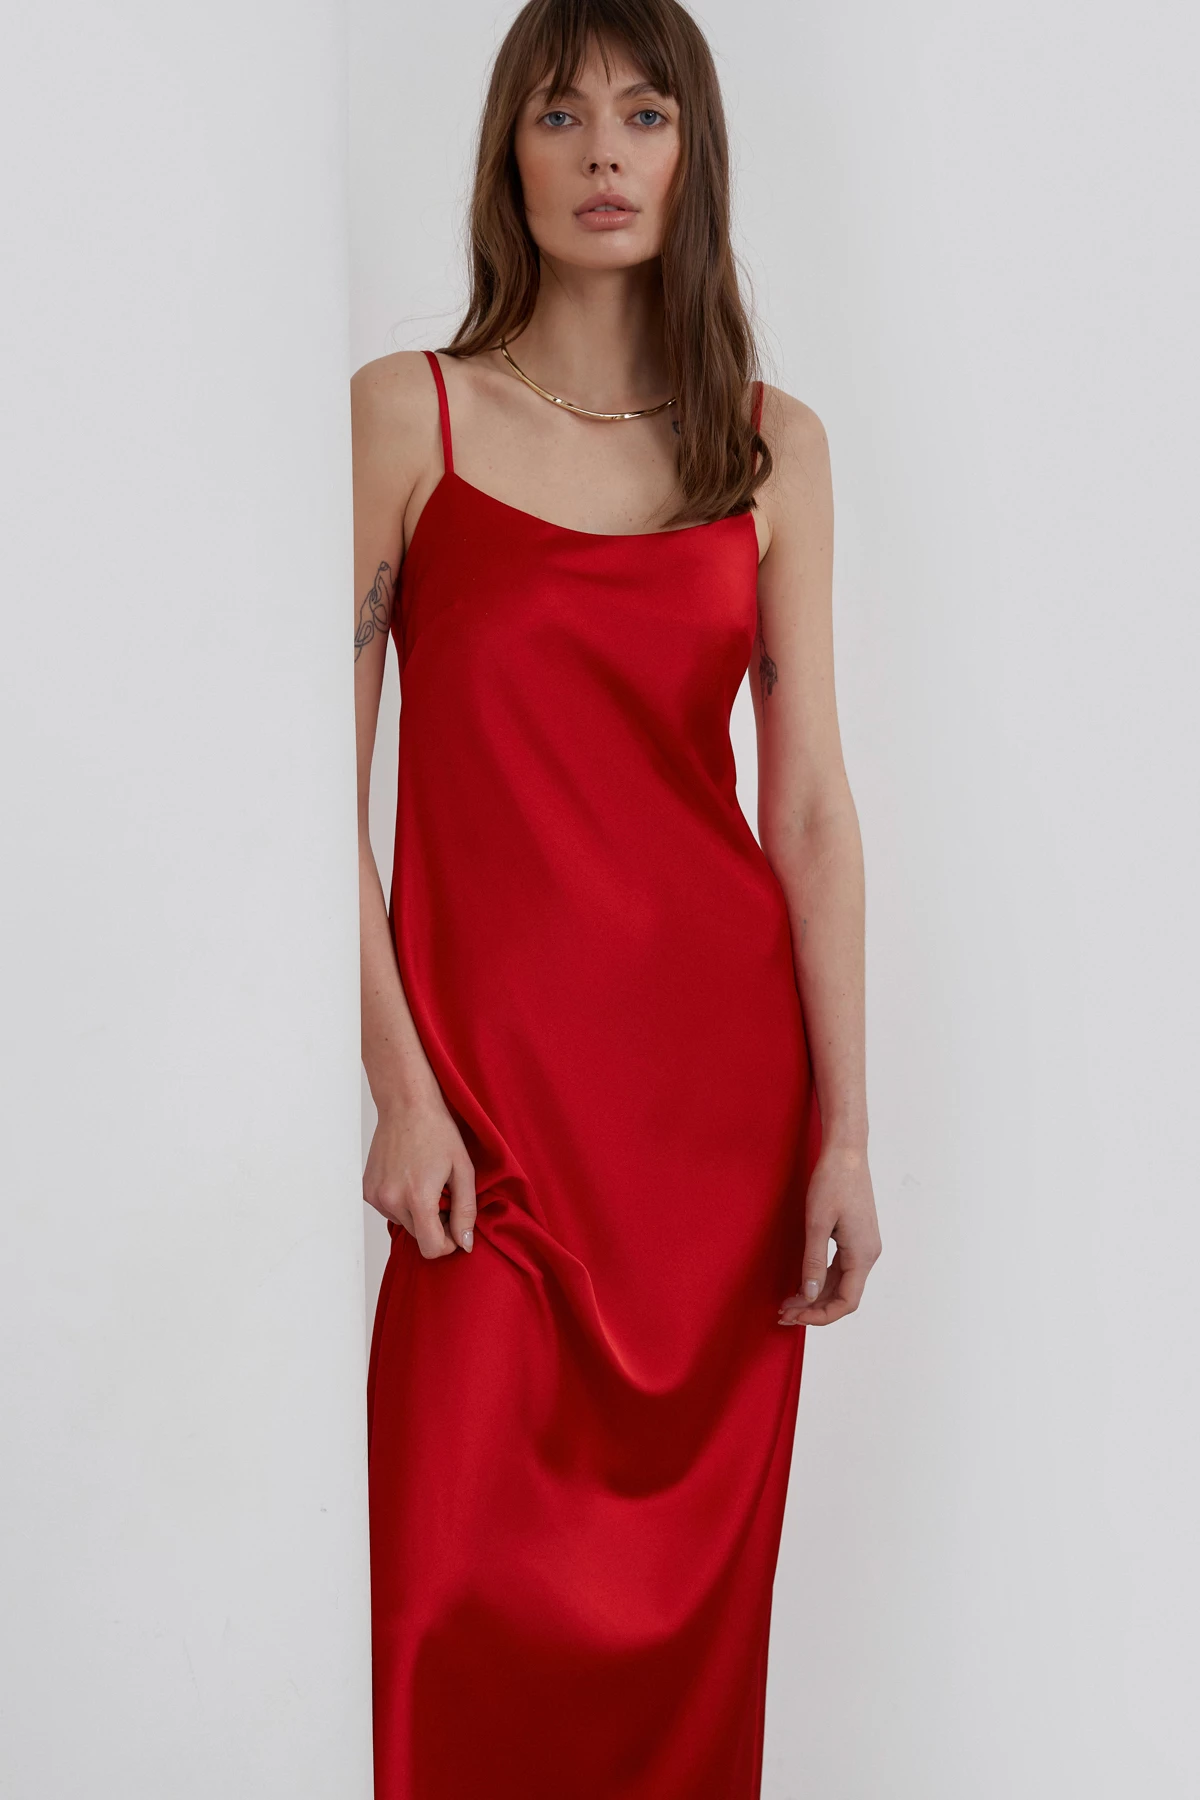 Red satin slip dress, photo 2